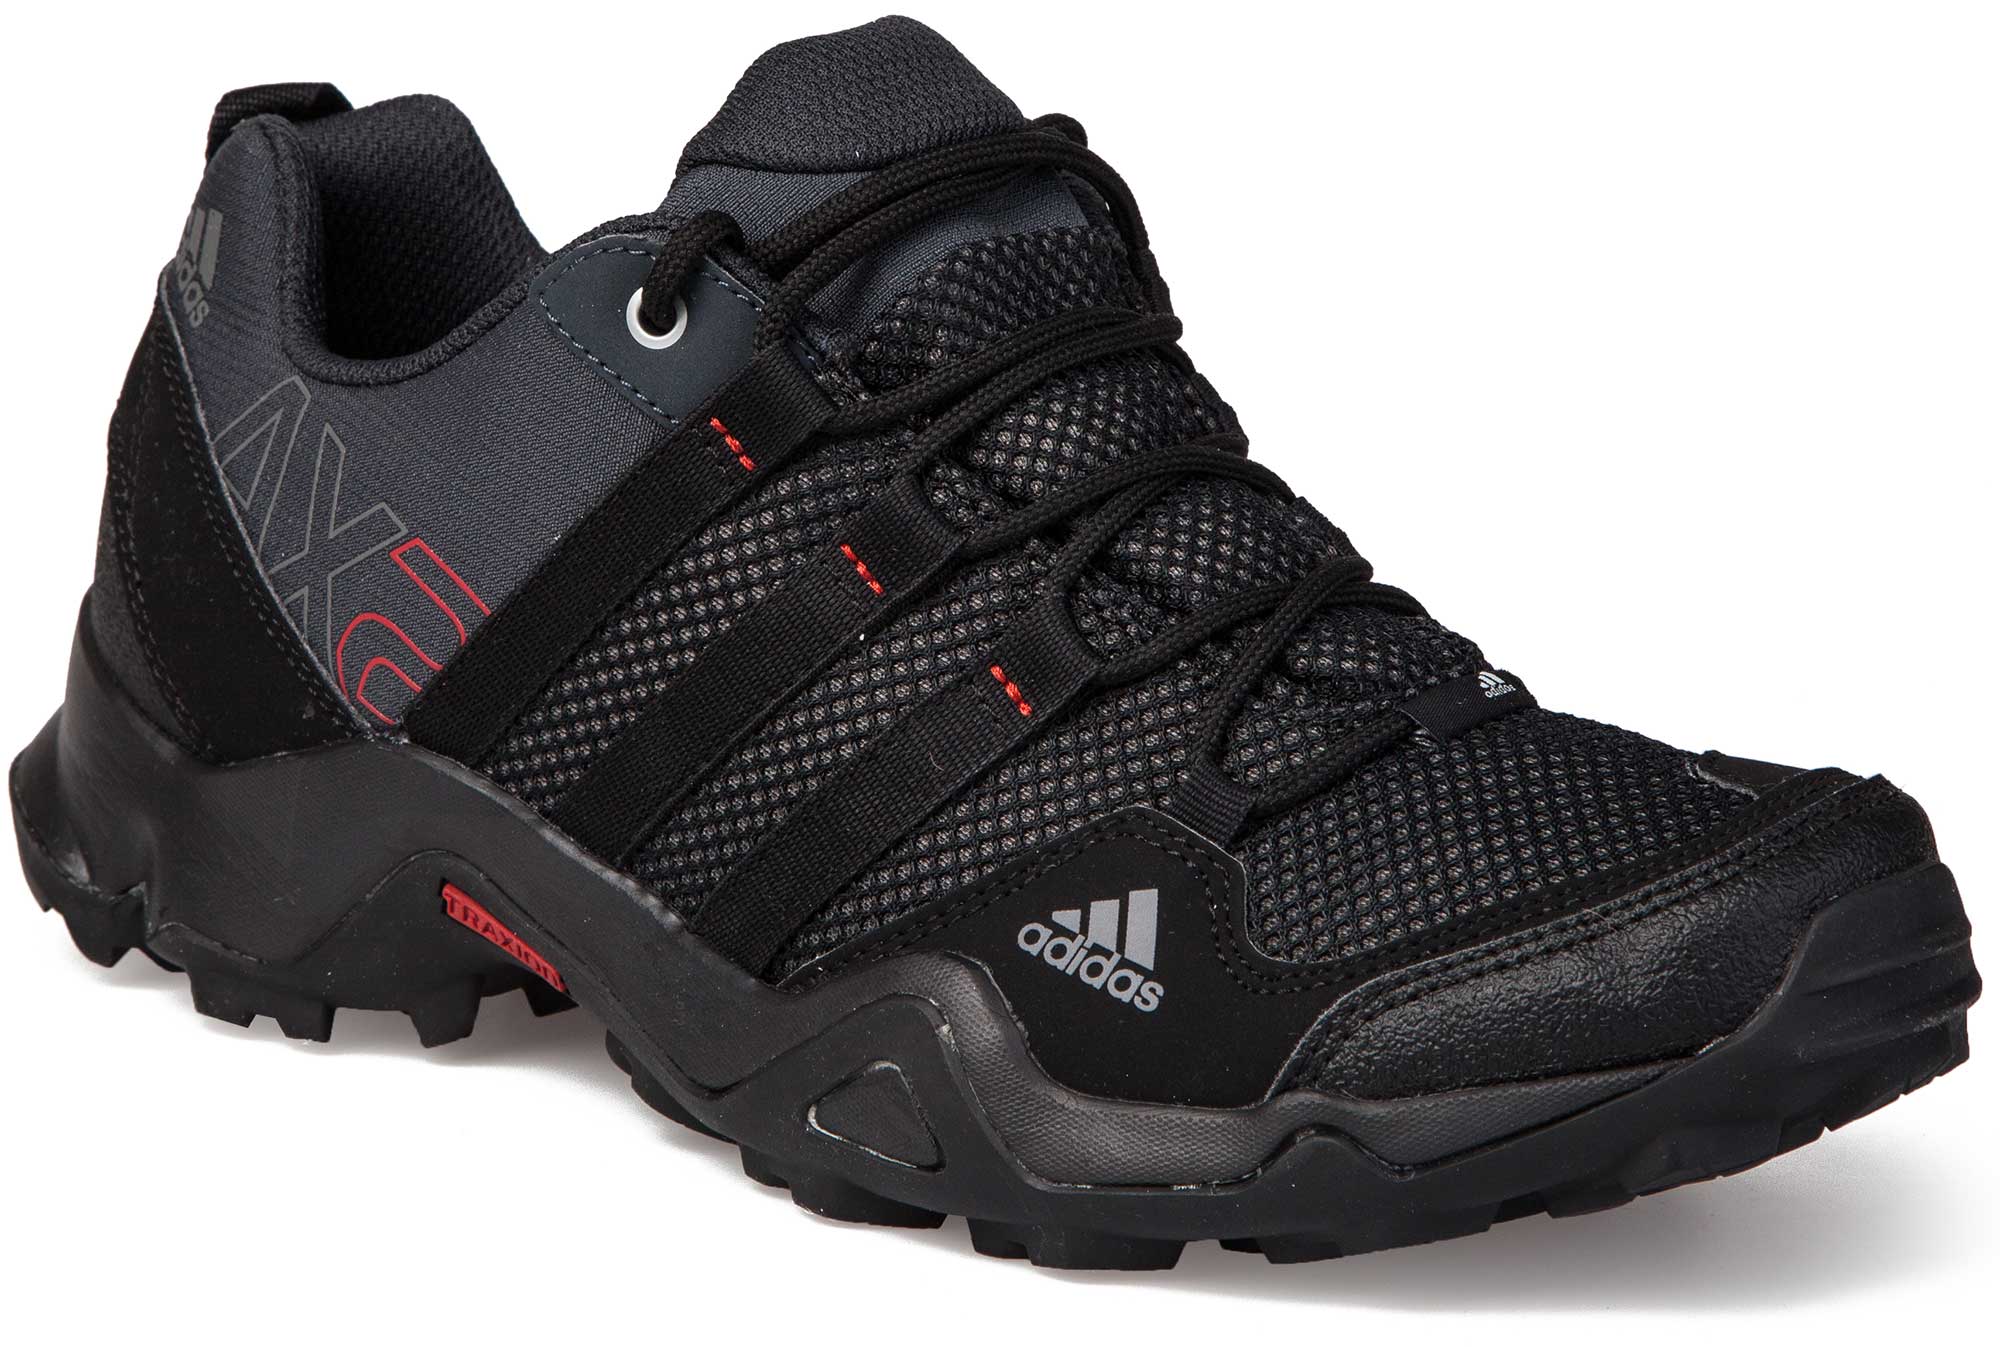 AX2 - Men's hiking shoes